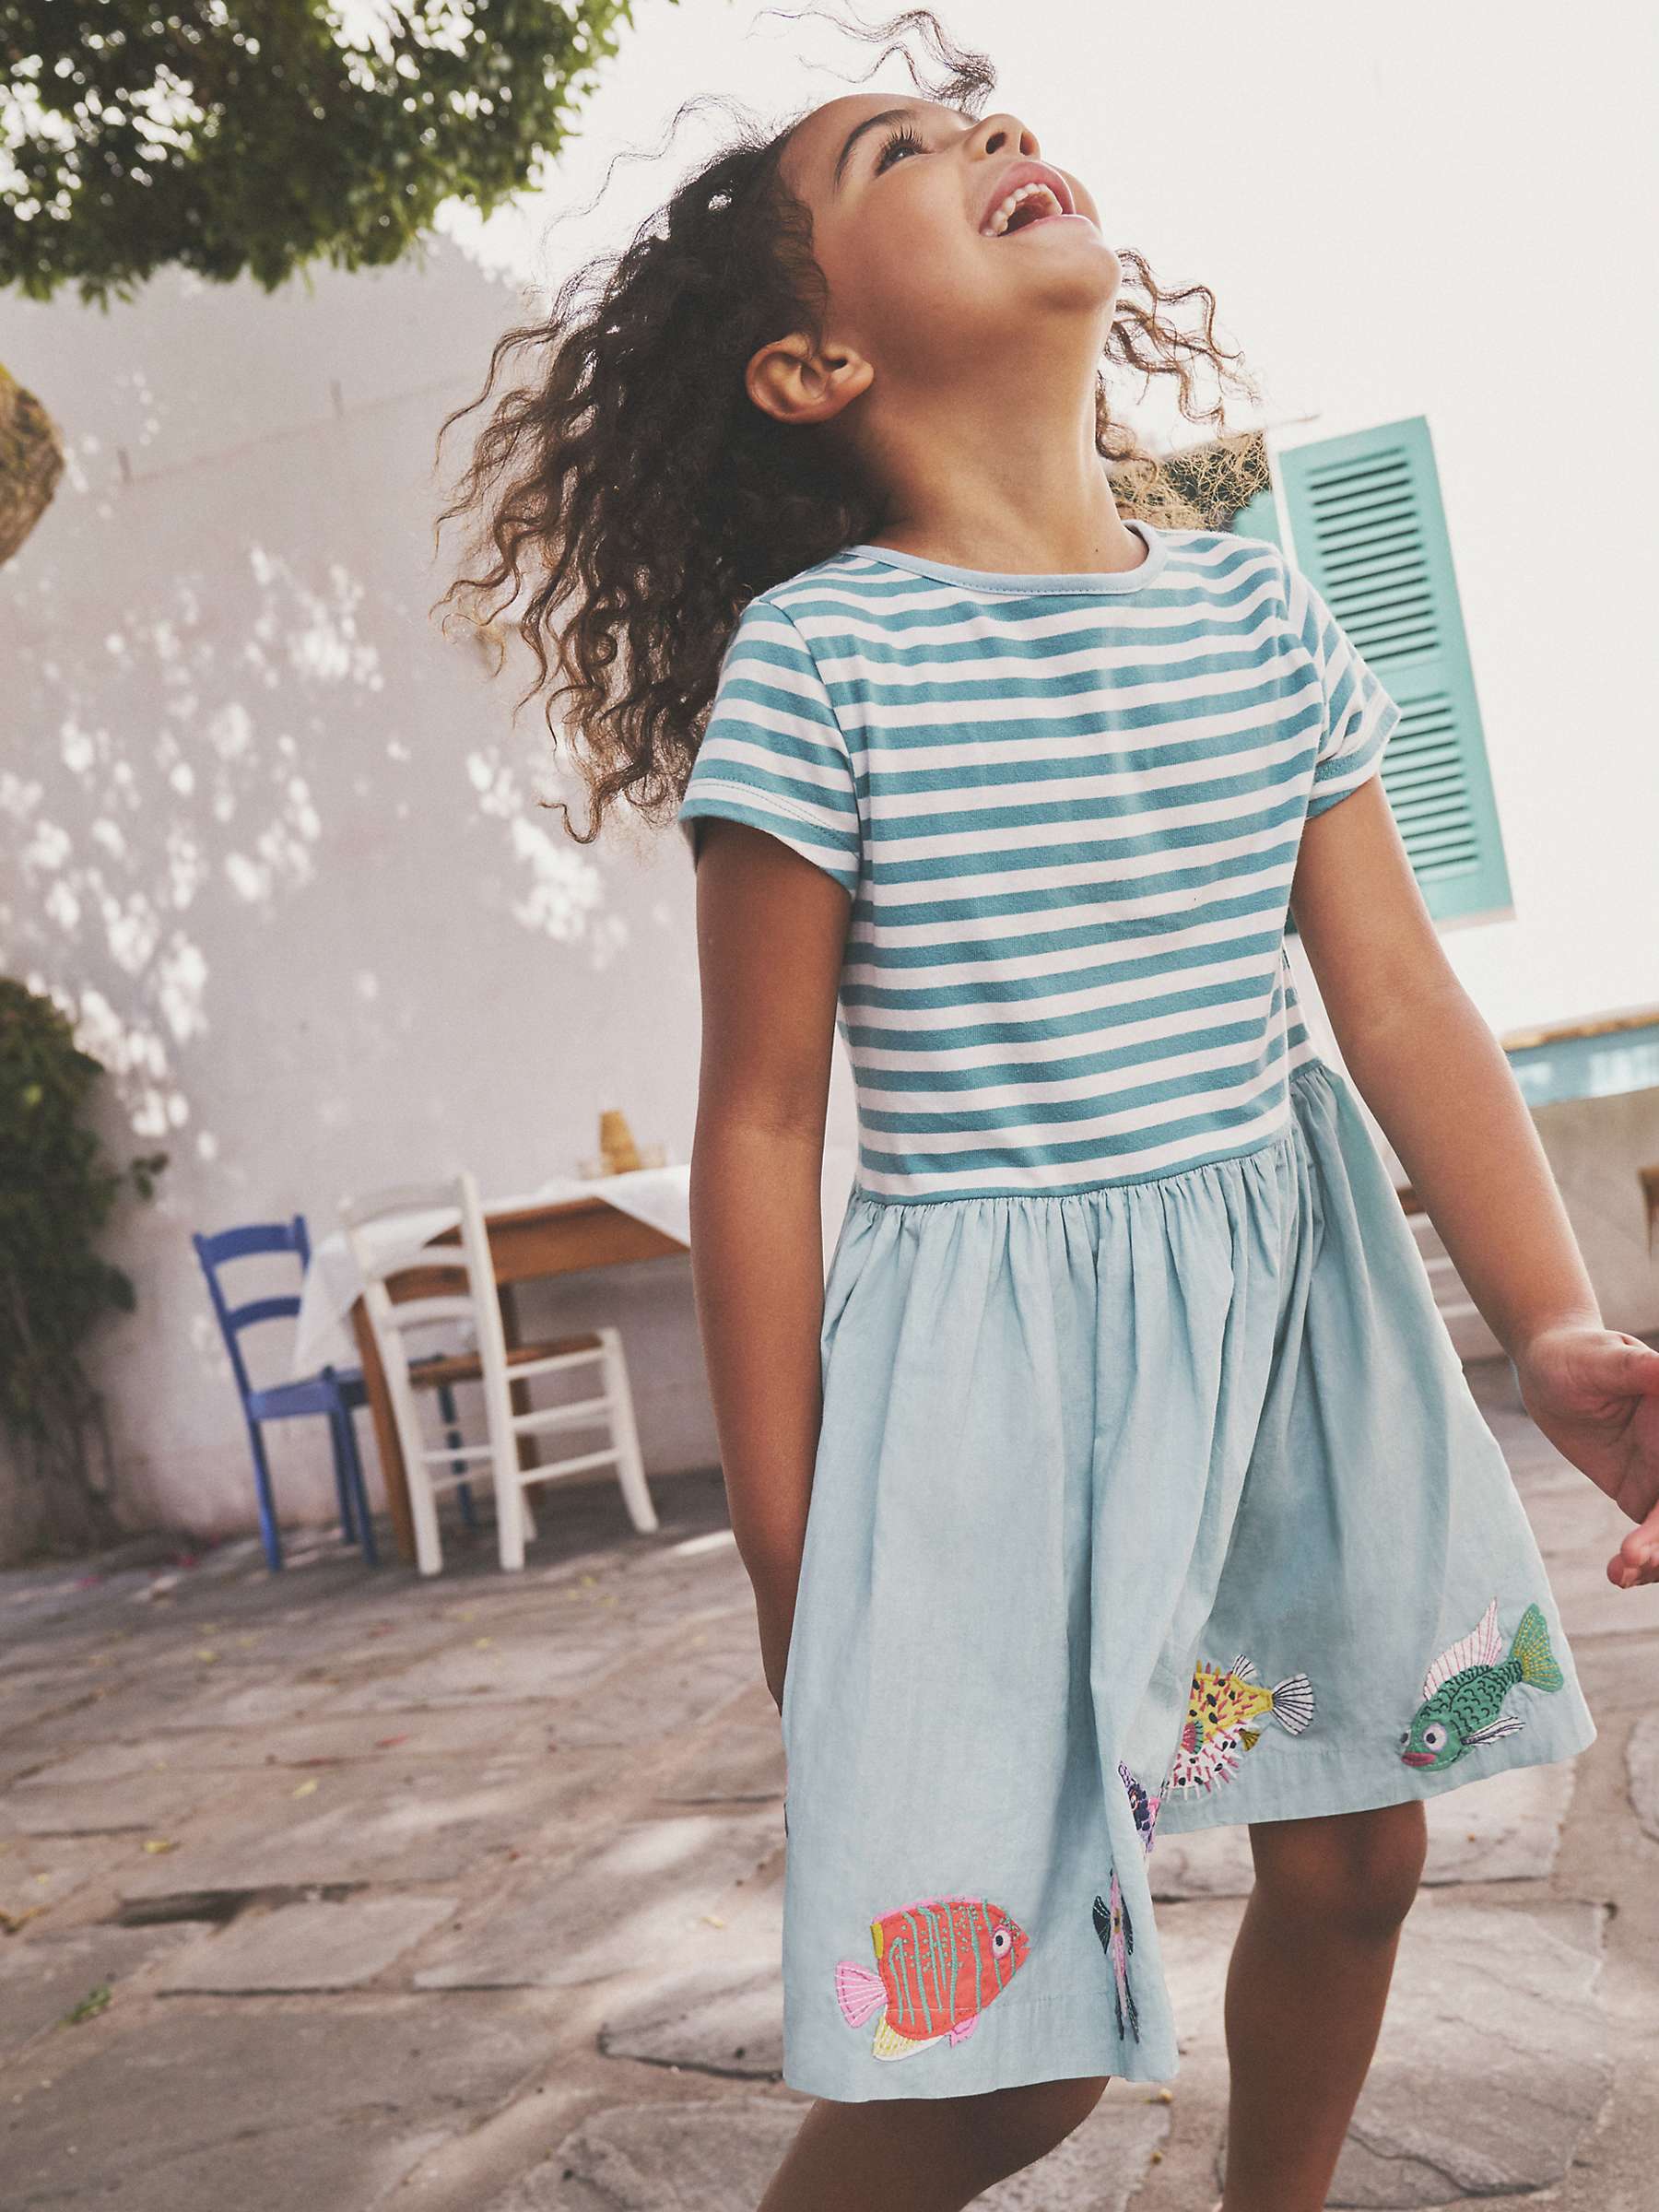 Buy Mini Boden Kids' Sealife Applique Stripe Woven Mix Dress, Blue/Vanilla Online at johnlewis.com